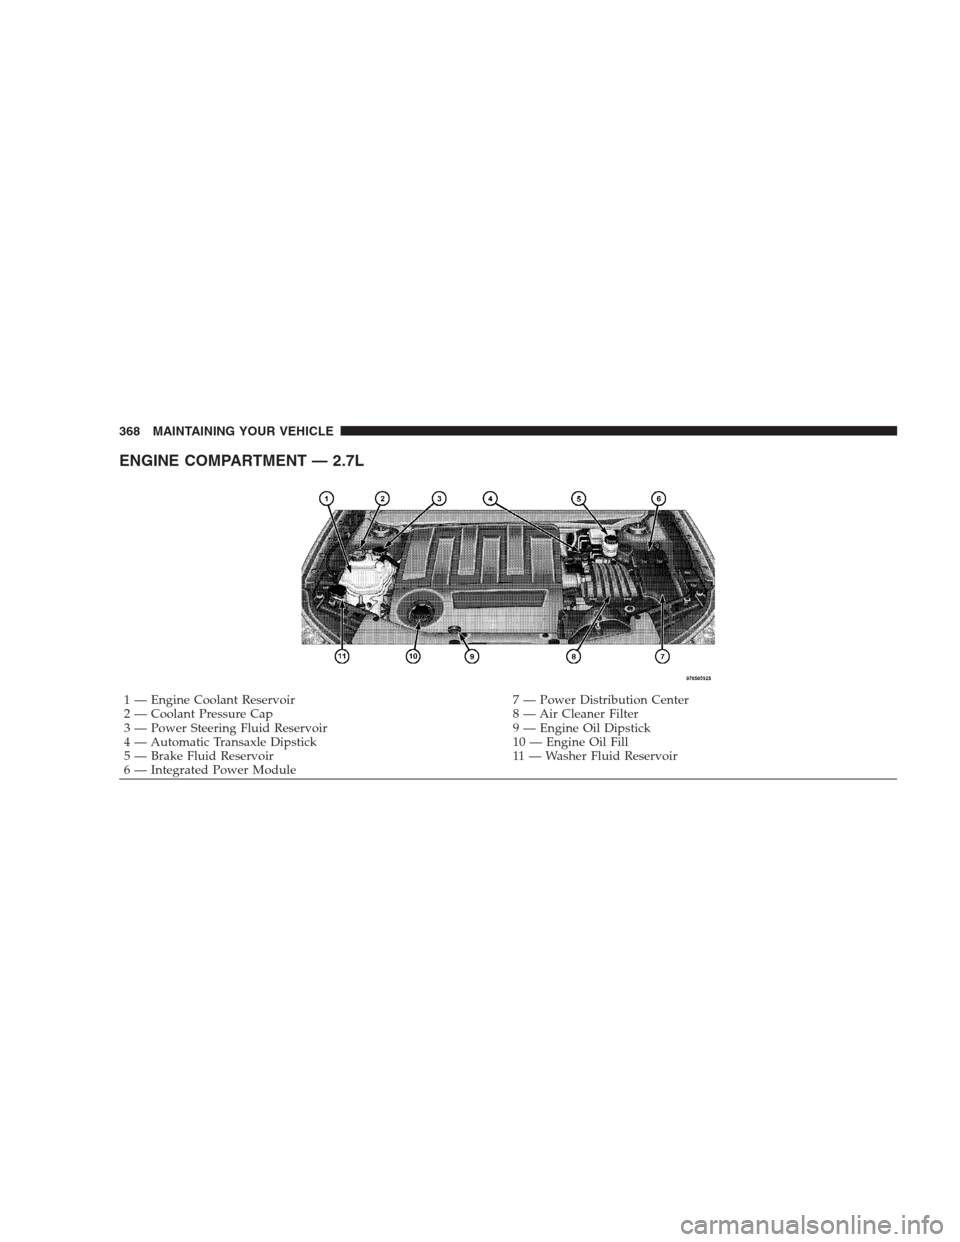 DODGE AVENGER 2009 2.G Owners Manual ENGINE COMPARTMENT — 2.7L
1 — Engine Coolant Reservoir 7 — Power Distribution Center
2 — Coolant Pressure Cap 8 — Air Cleaner Filter
3 — Power Steering Fluid Reservoir 9 — Engine Oil Dip